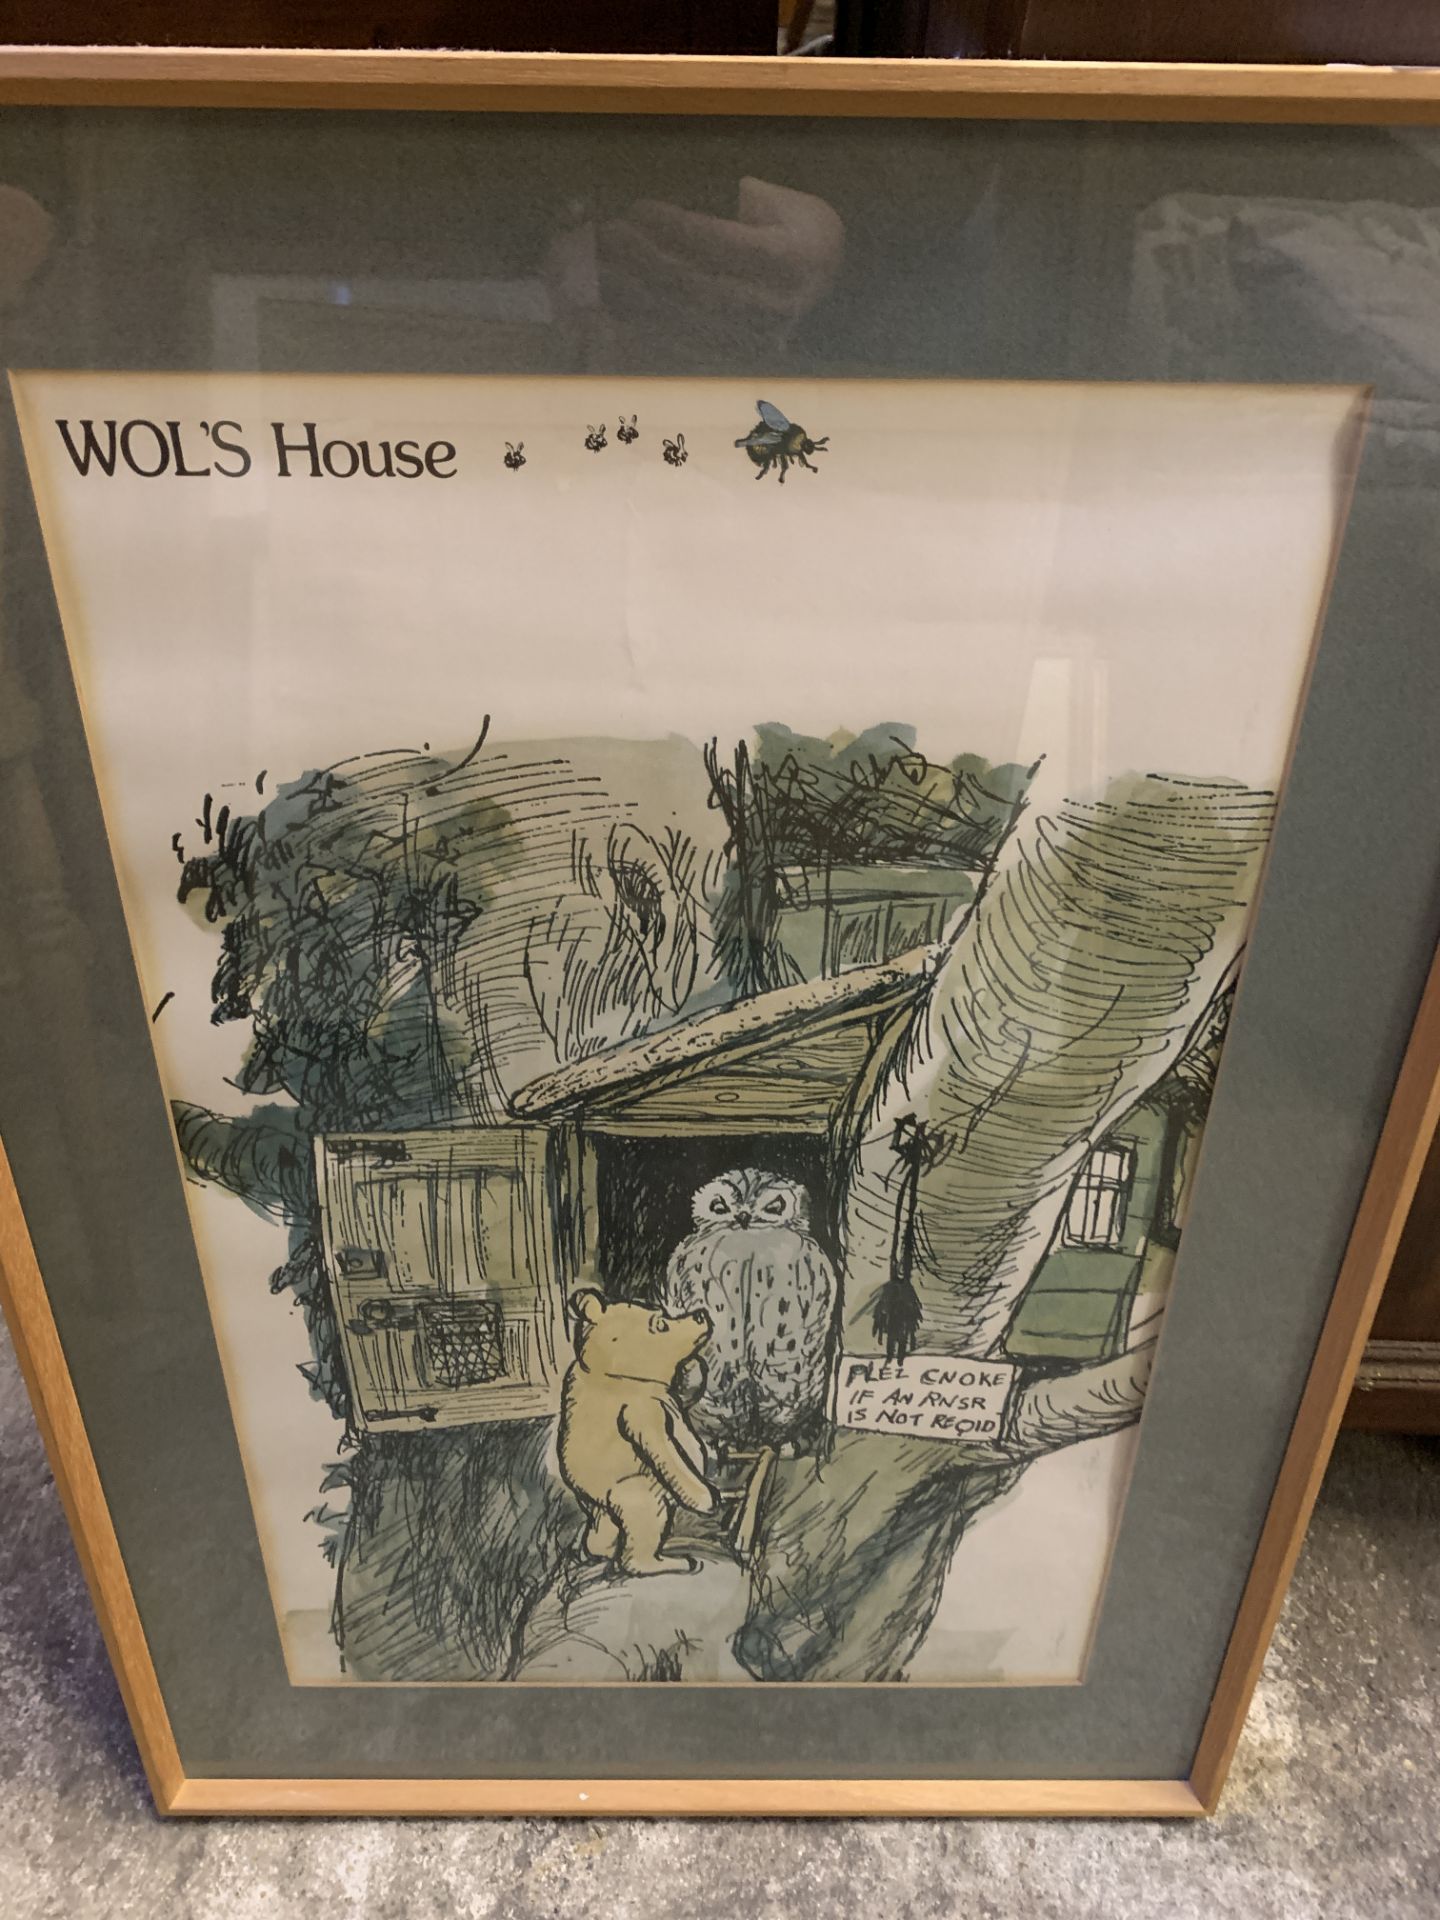 Large Winnie the Pooh print entitled "Wols House". - Image 3 of 3